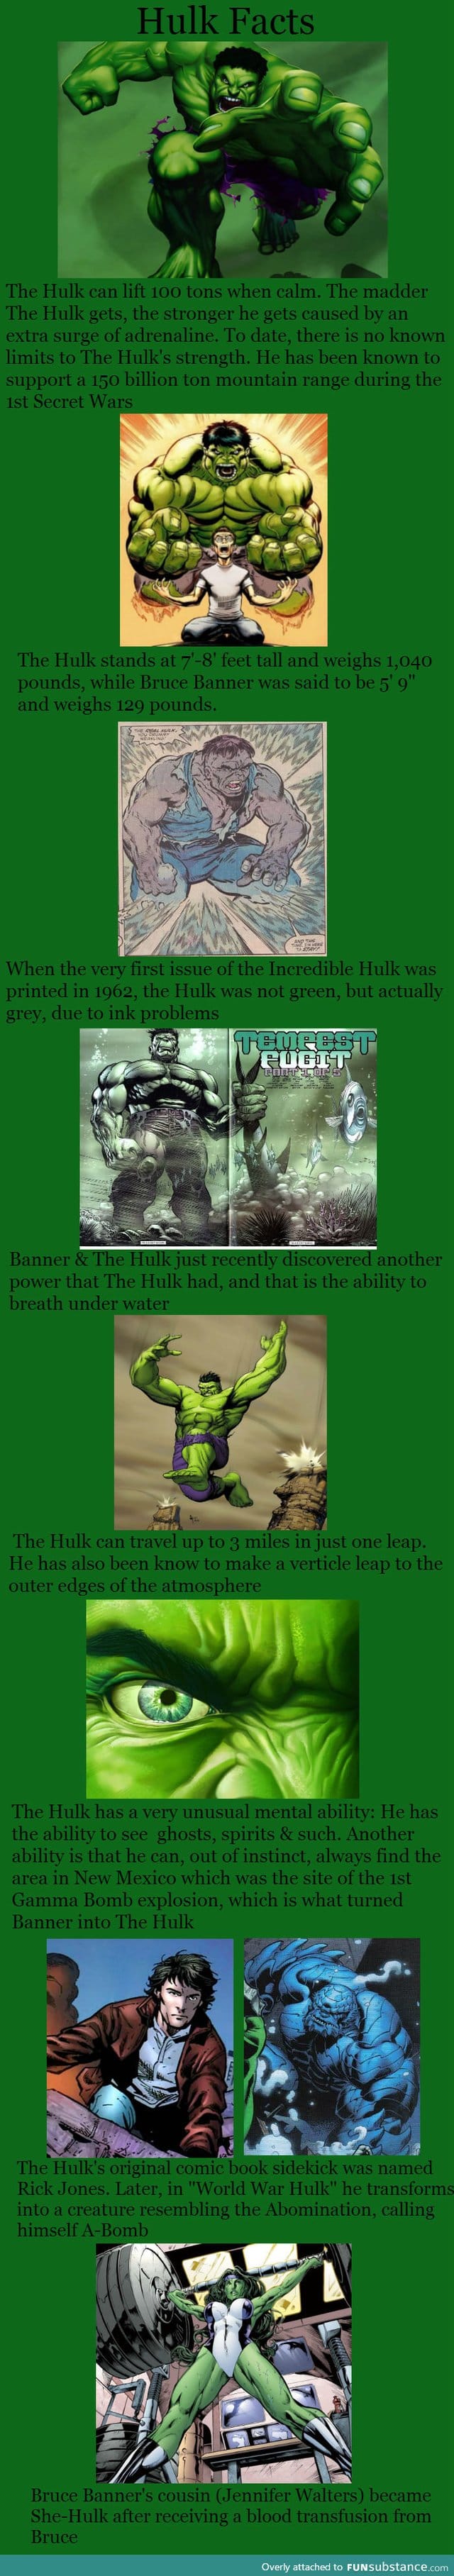 The hulk facts